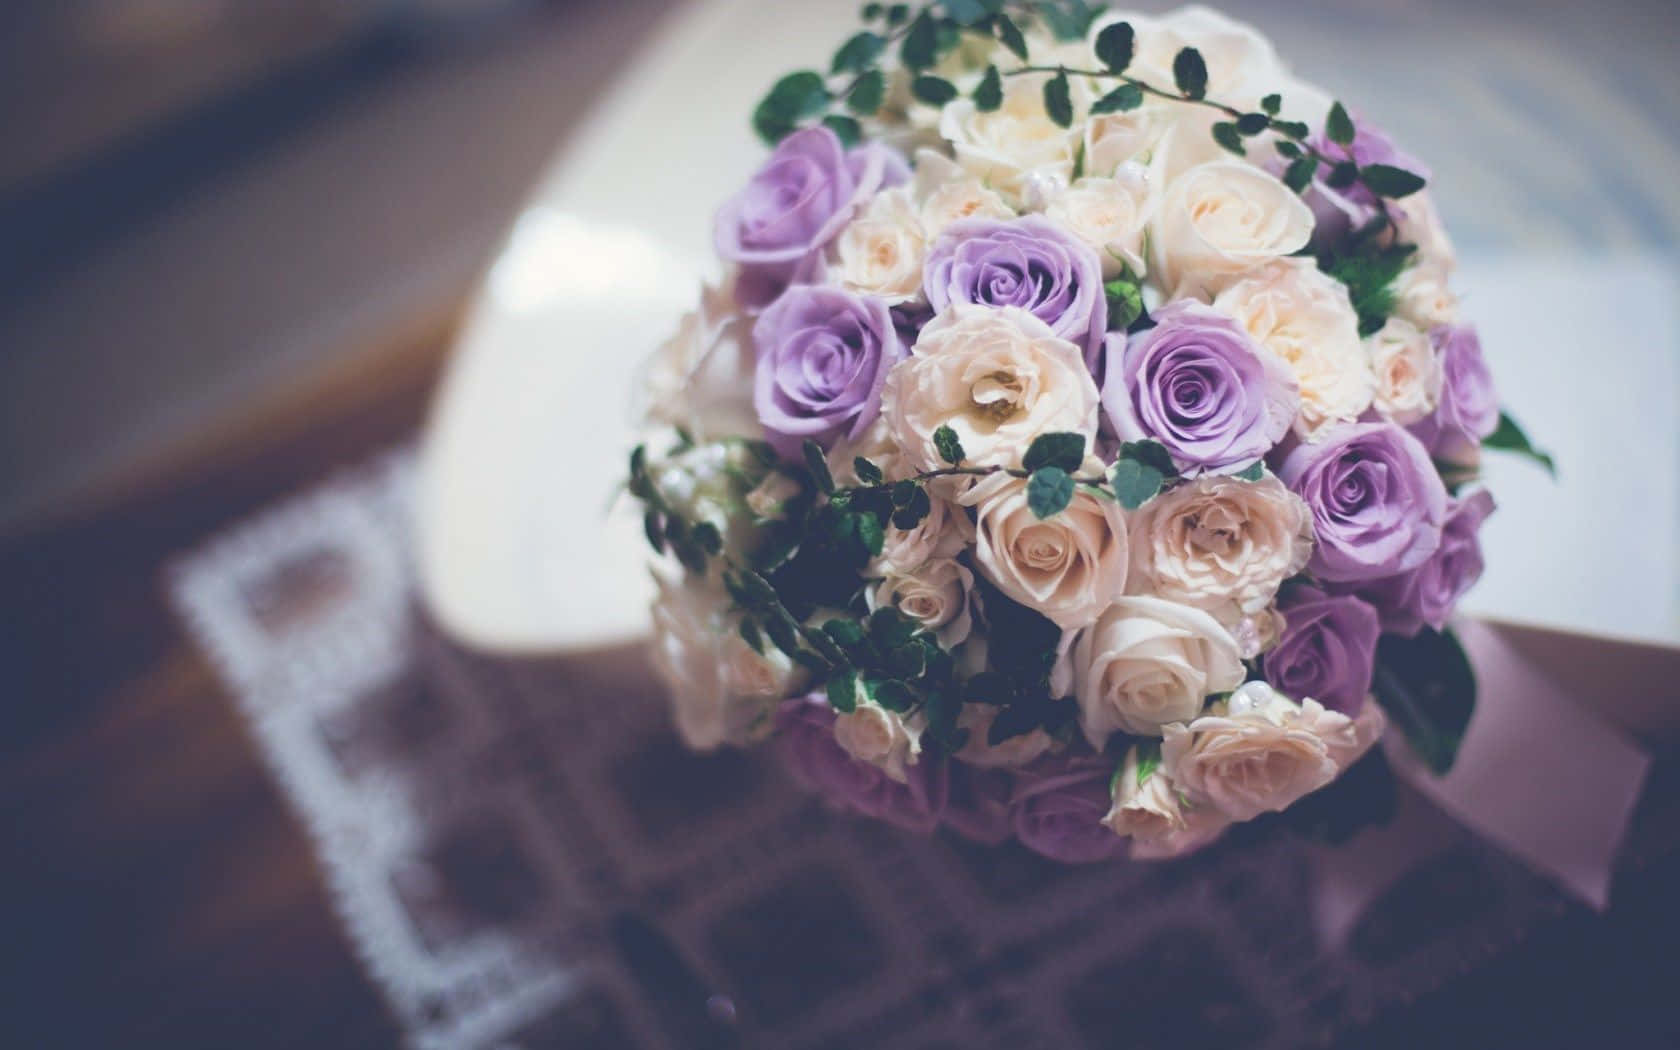 Elegant wedding flower arrangement on a beautifully set table at an outdoor reception Wallpaper